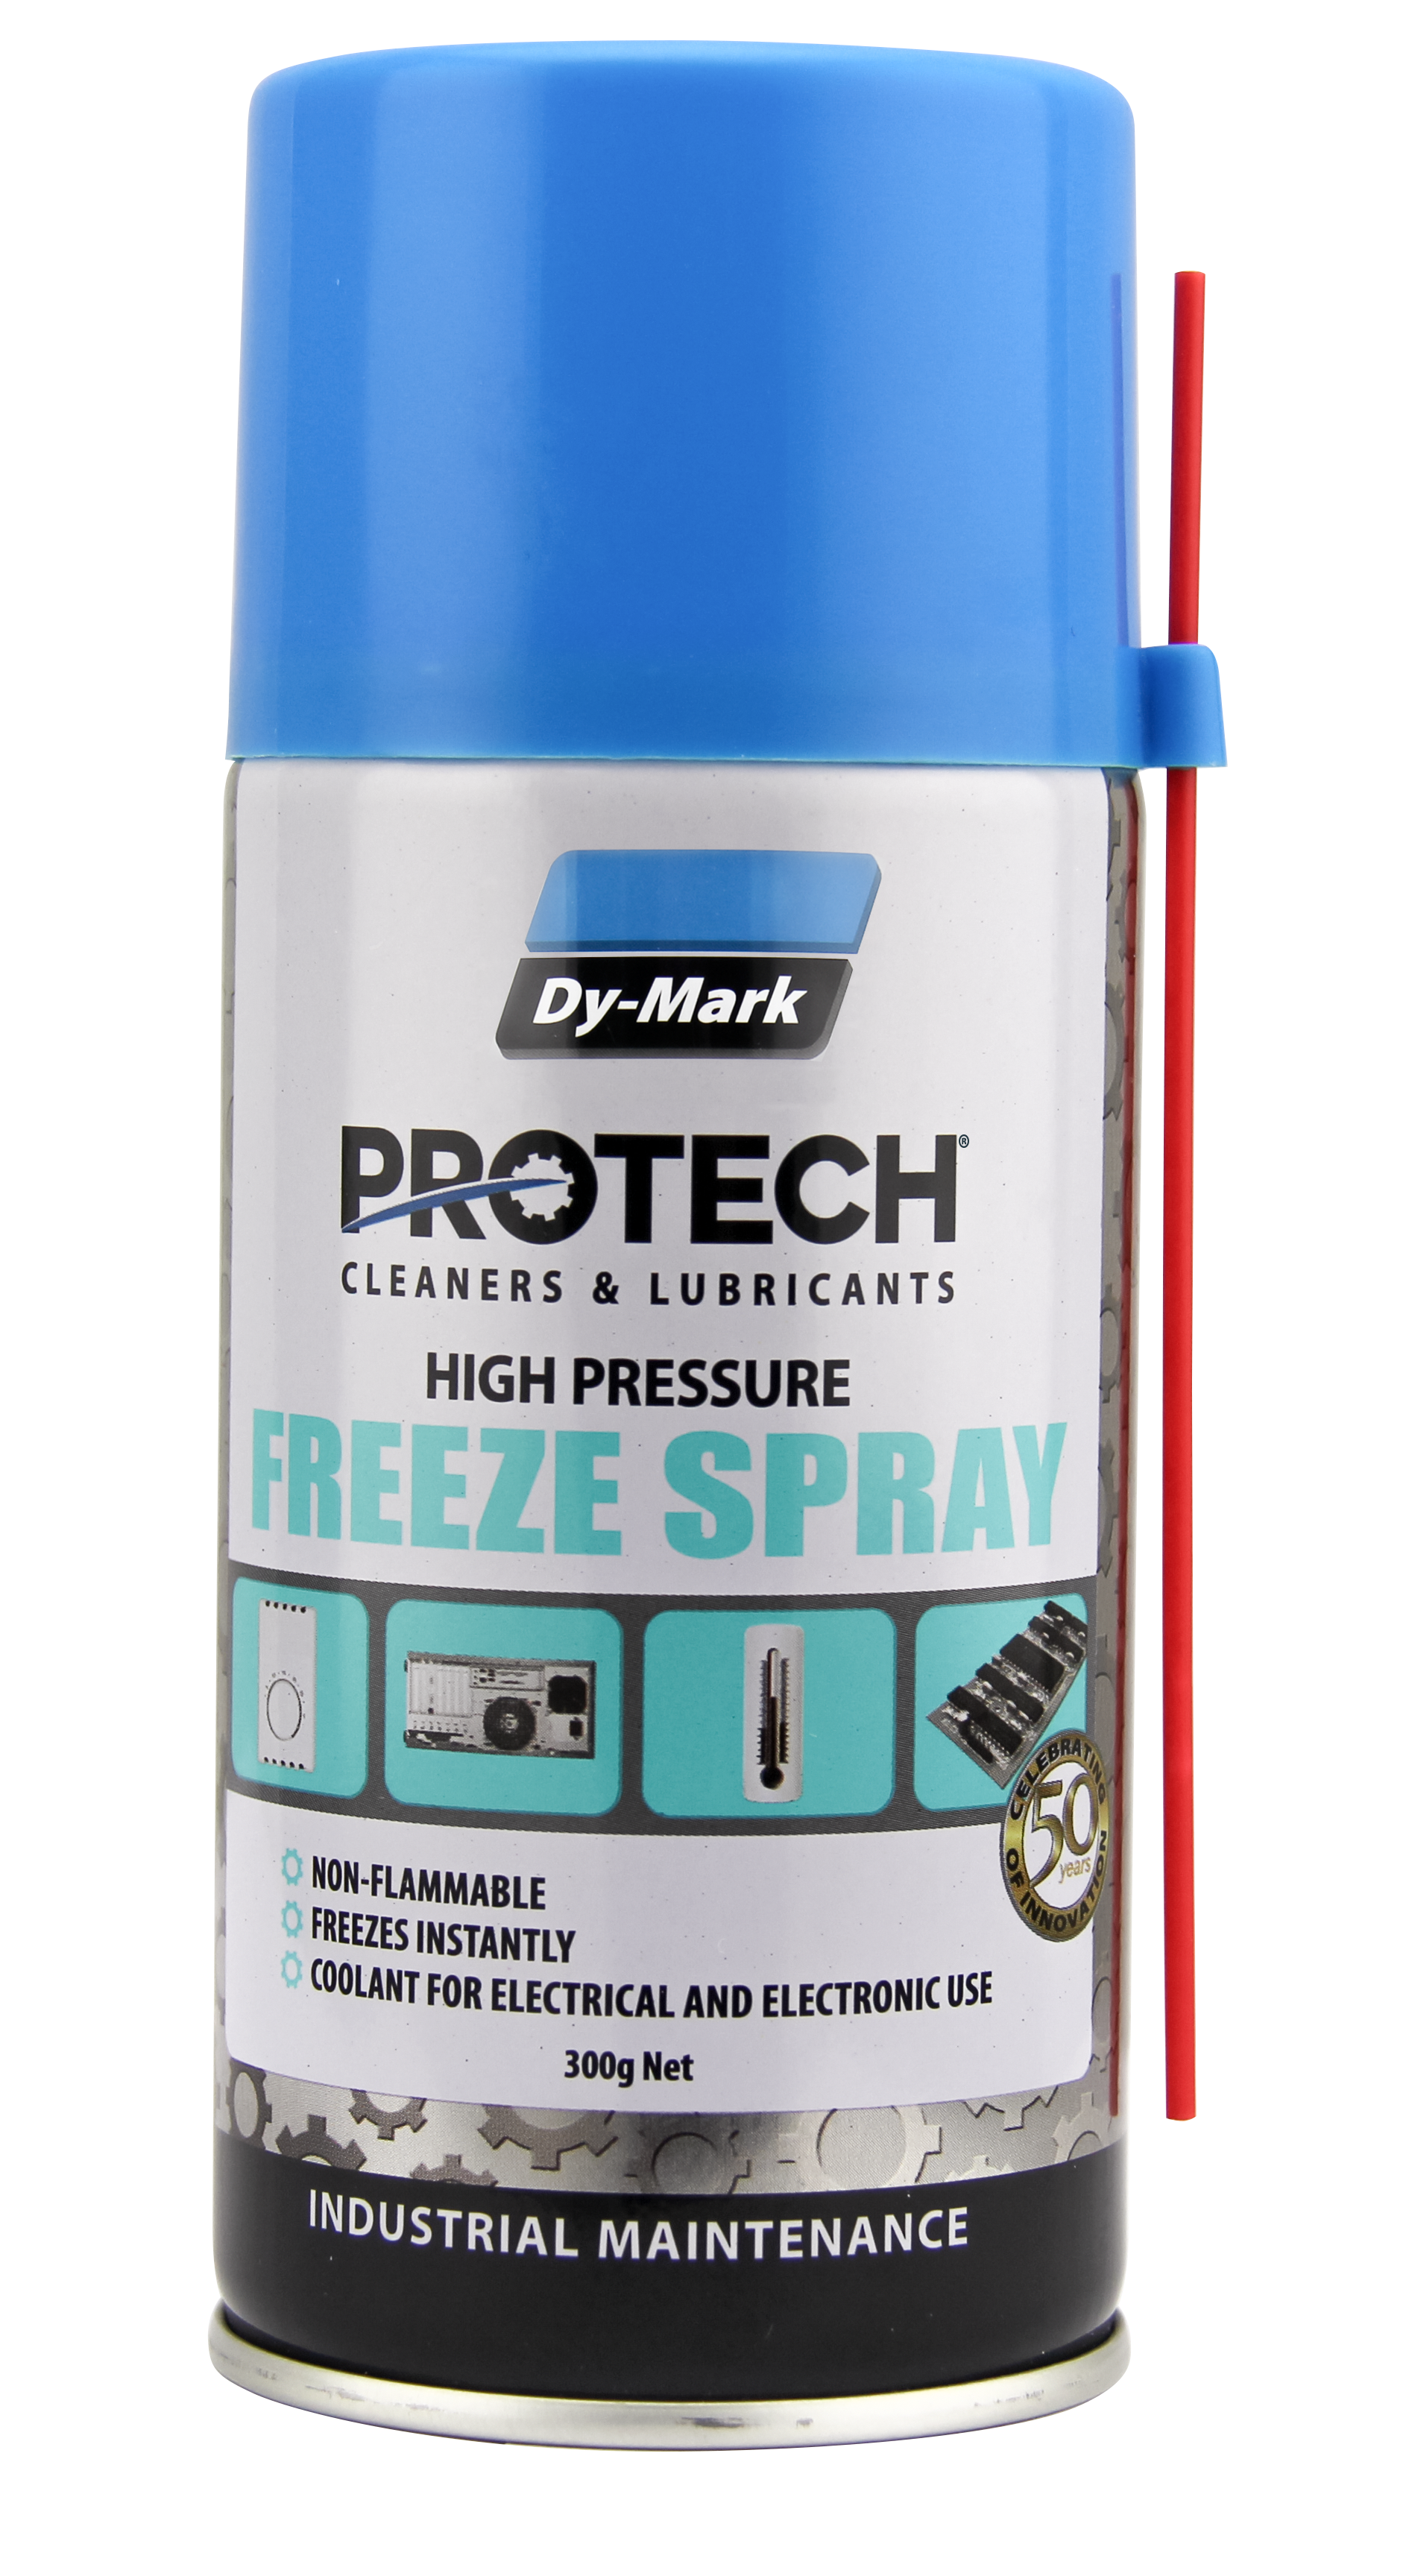 Dy-Mark Protech Freeze Spray